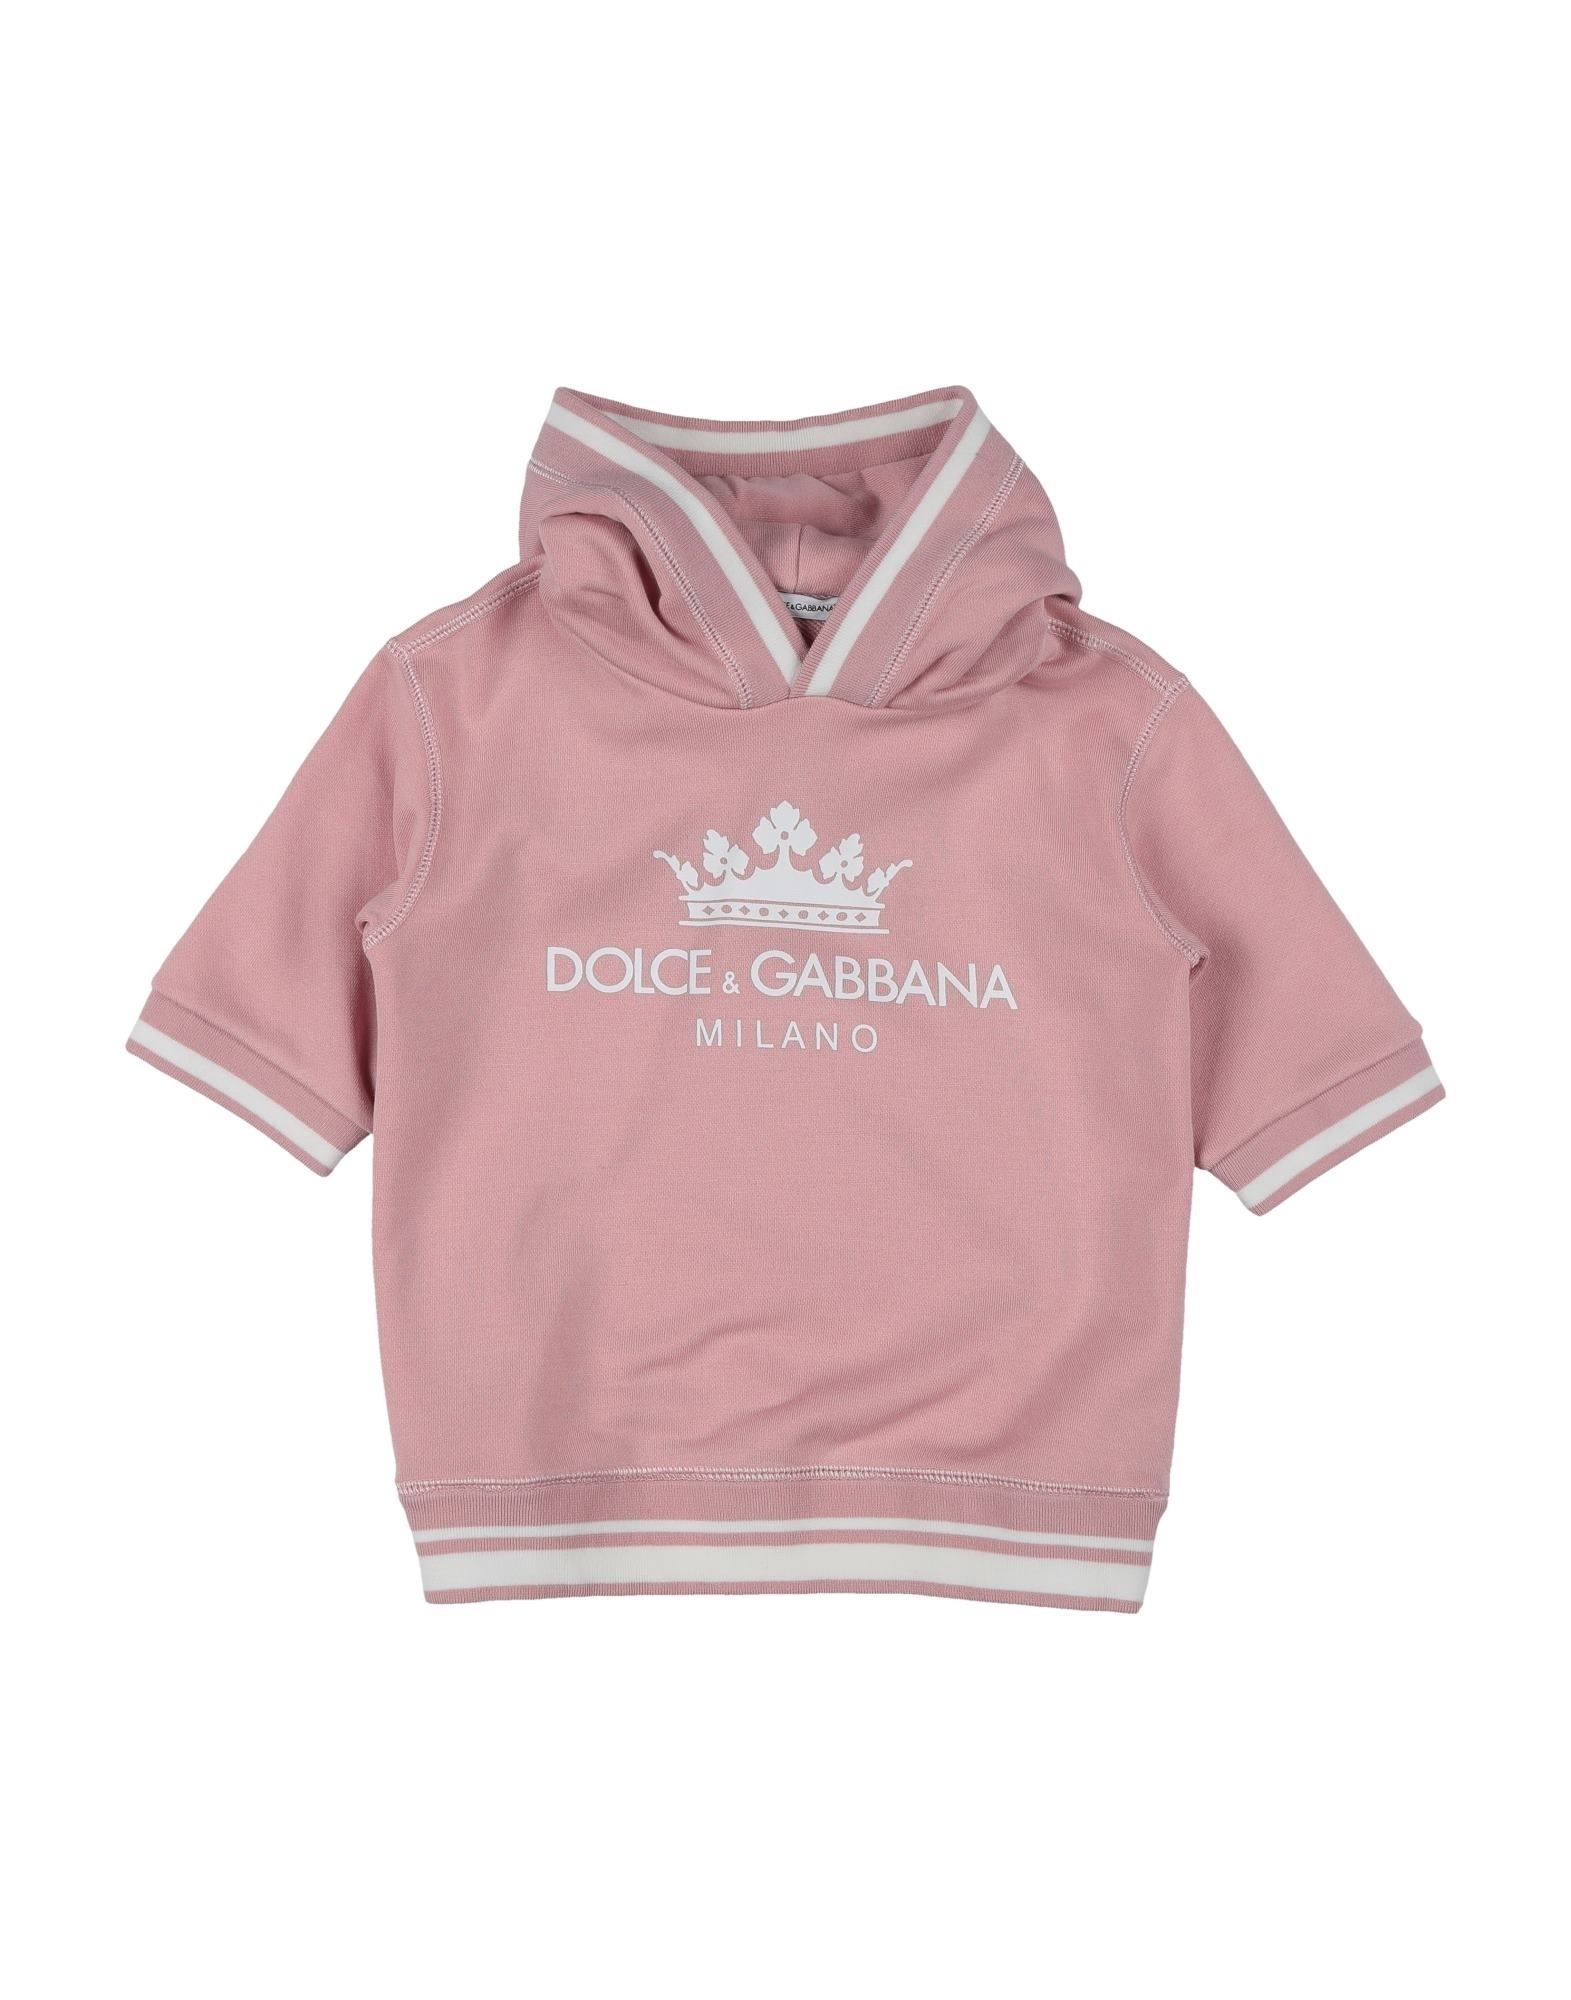 DOLCE & GABBANA Sweatshirts - Item 12531304